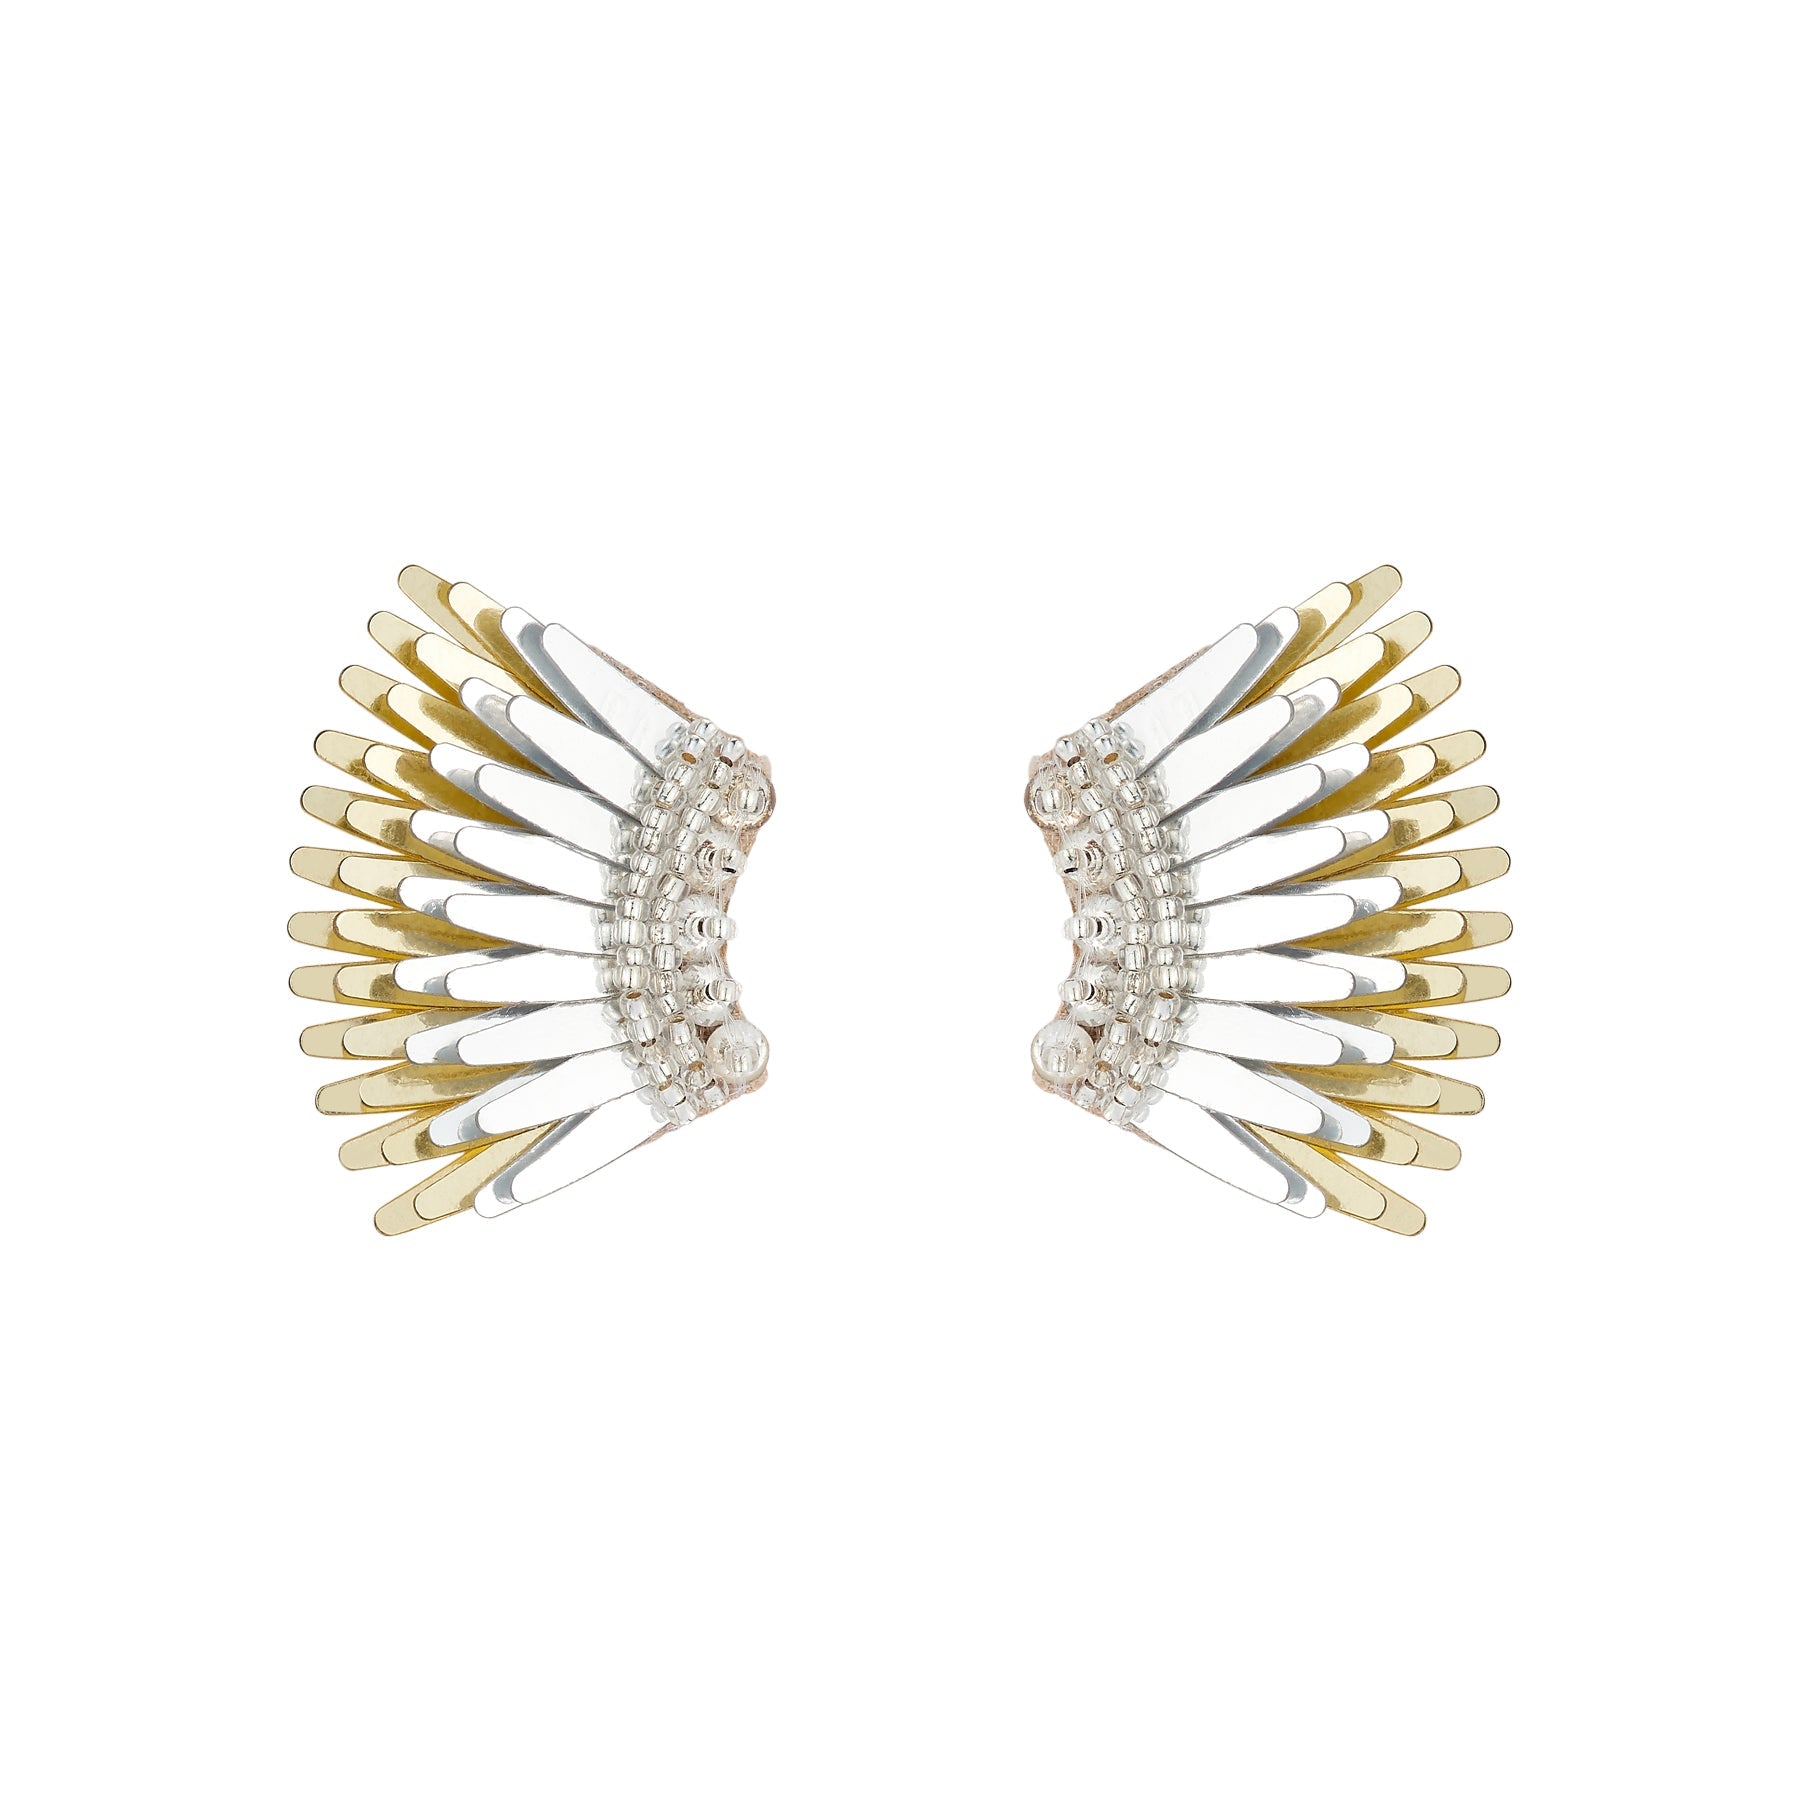 Micro Madeline Earrings Silver Gold by Mignonne Gavigan